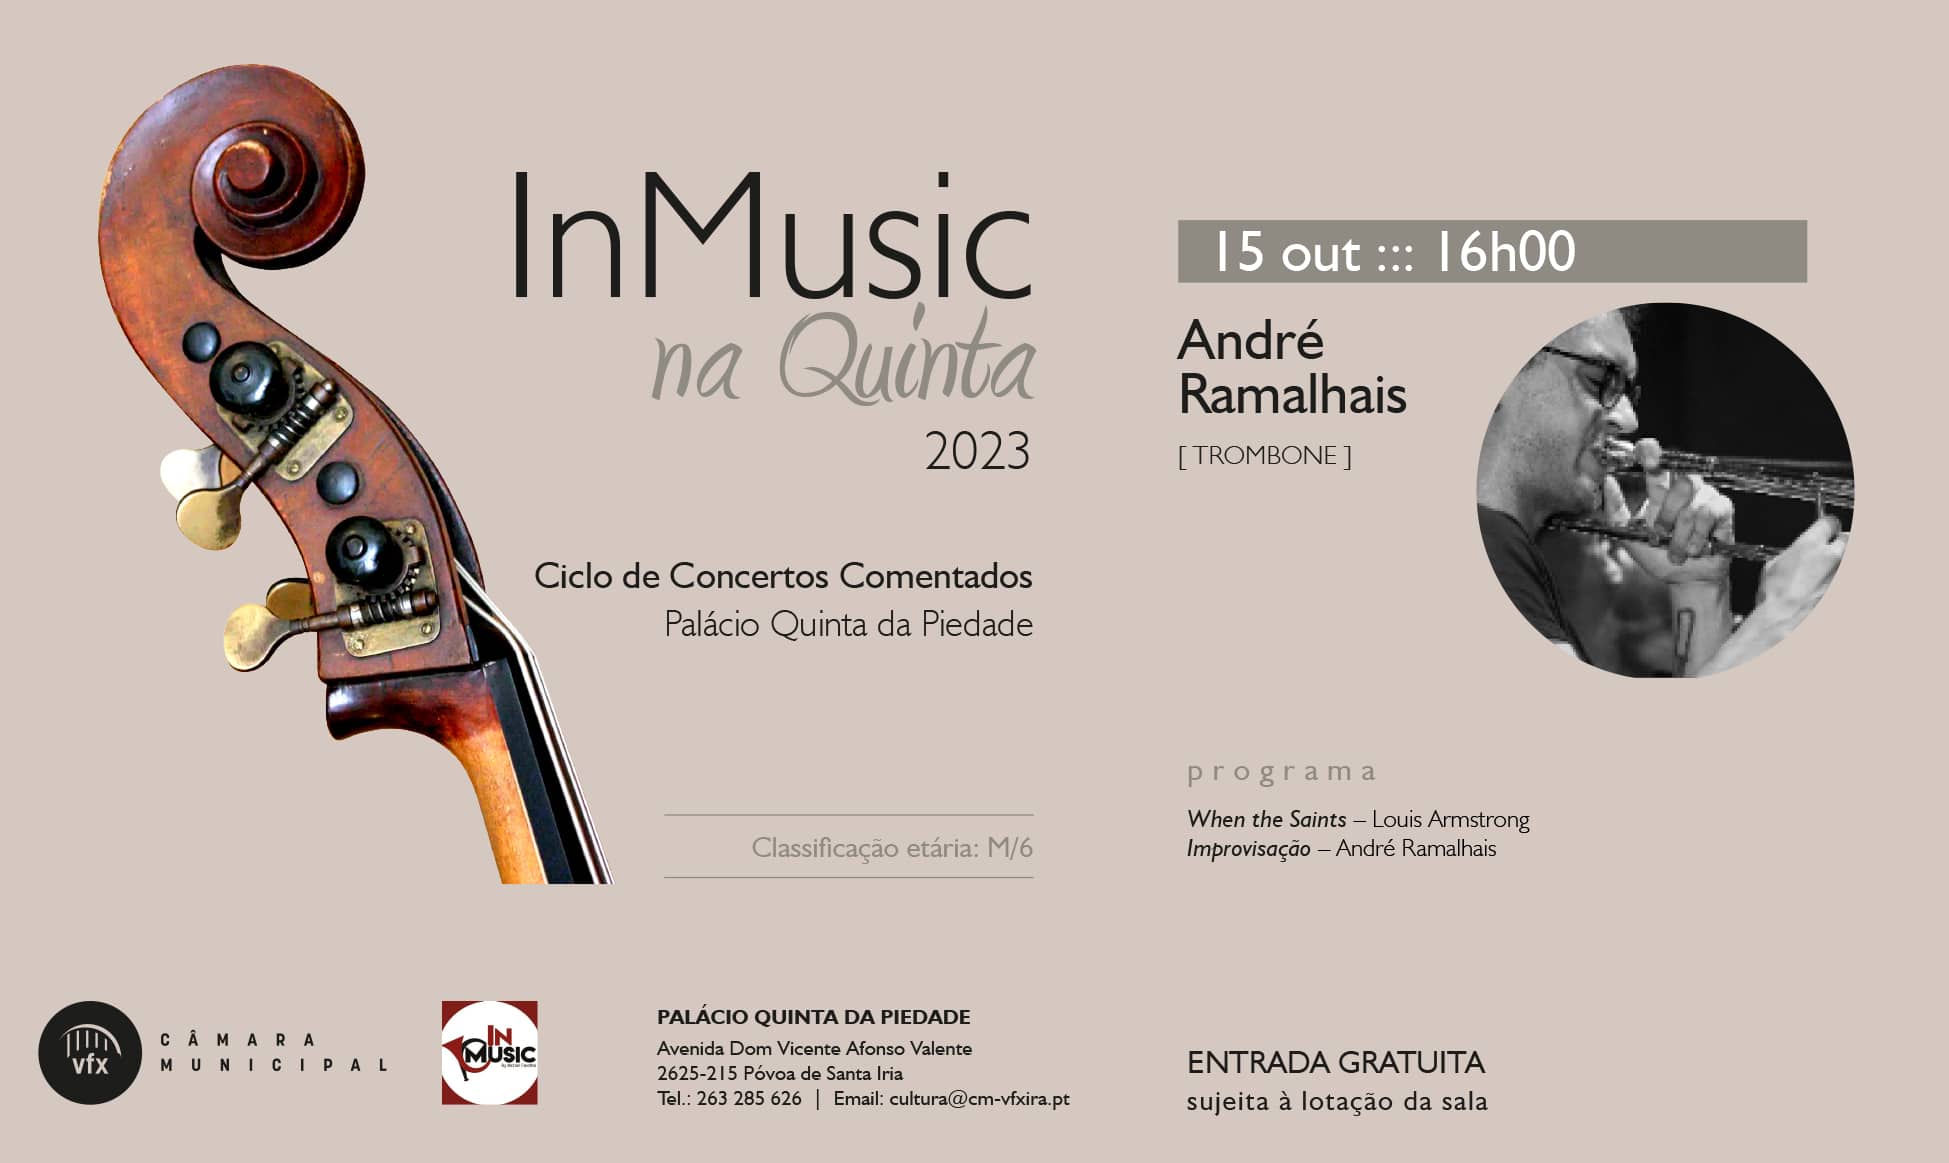 InMusic na Quinta - André Ramalhais no trombone